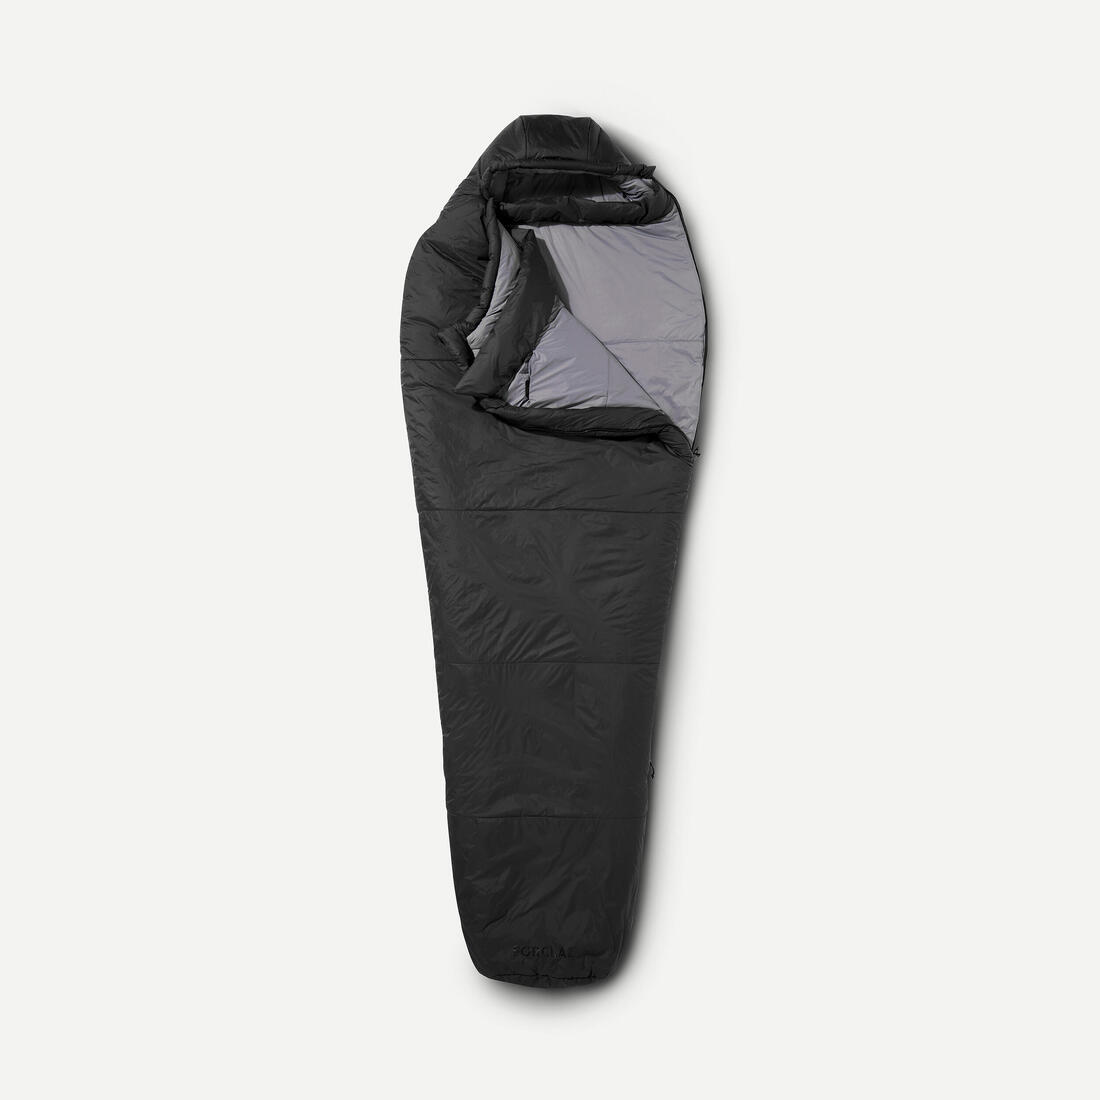 Trekking sleeping Bag - MT500 5°C - Polyester